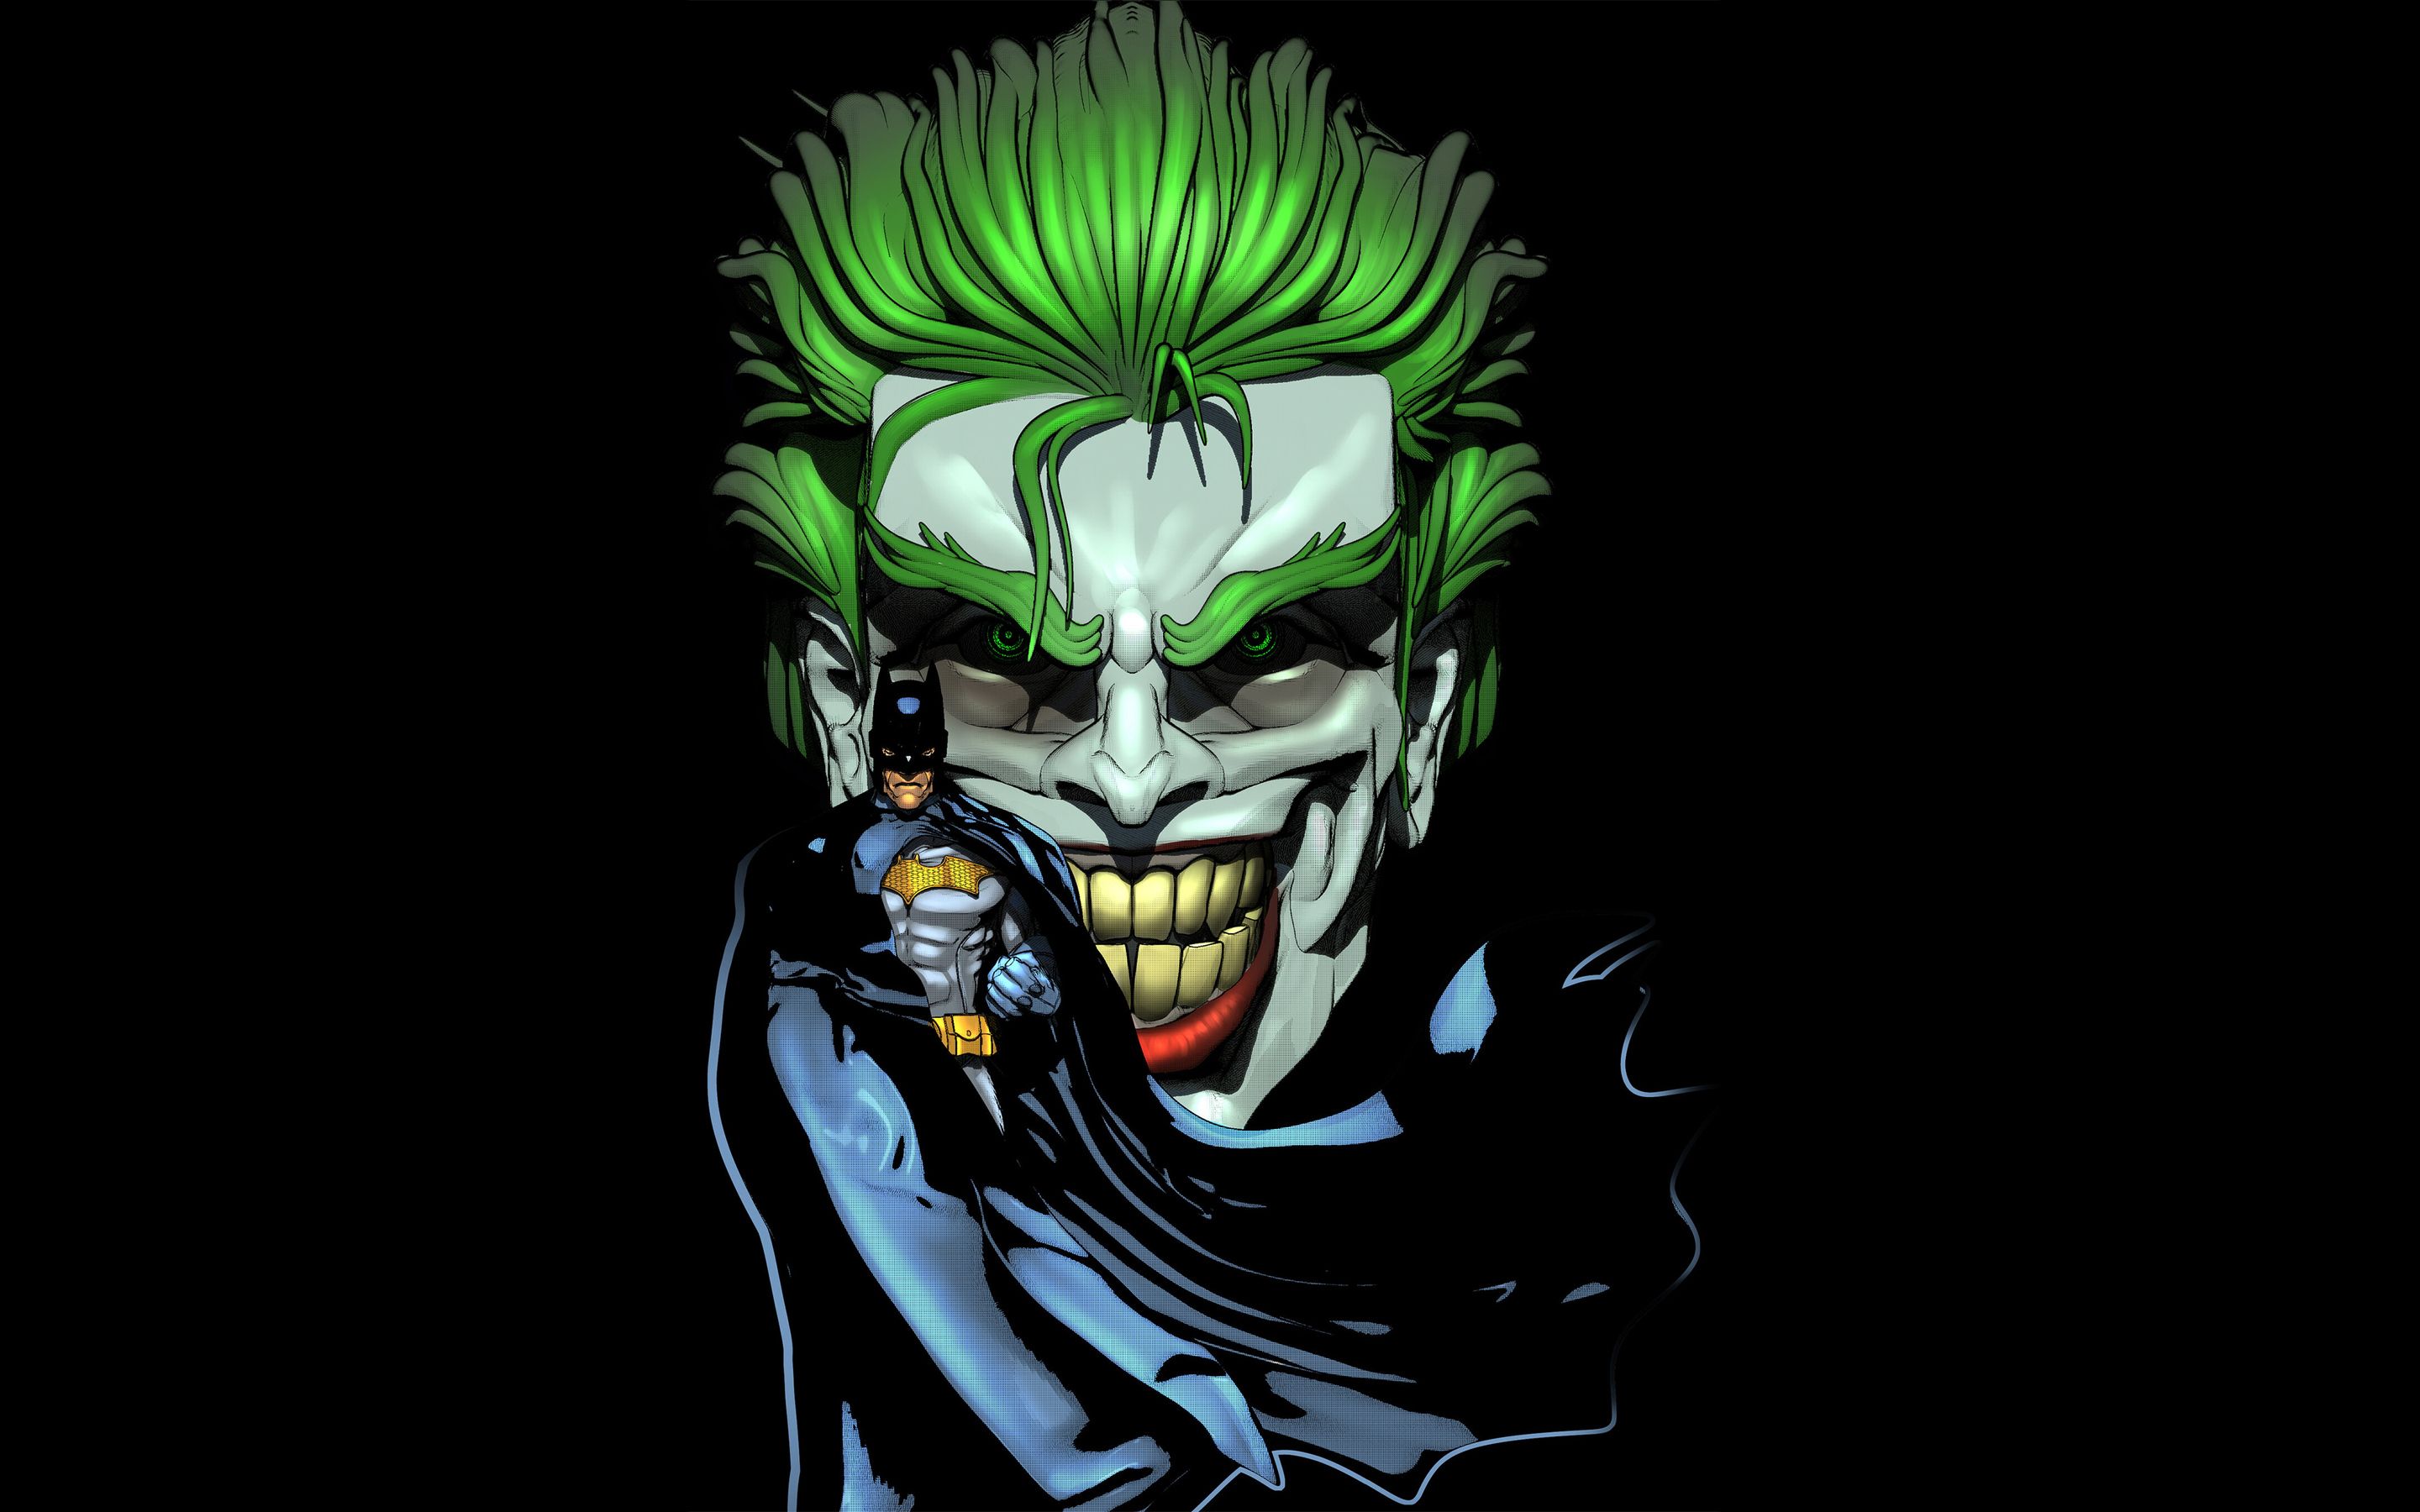 Joker Evil Laugh Batman Macbook Pro Retina HD 4k Wallpaper, Image, Background, Photo and Picture